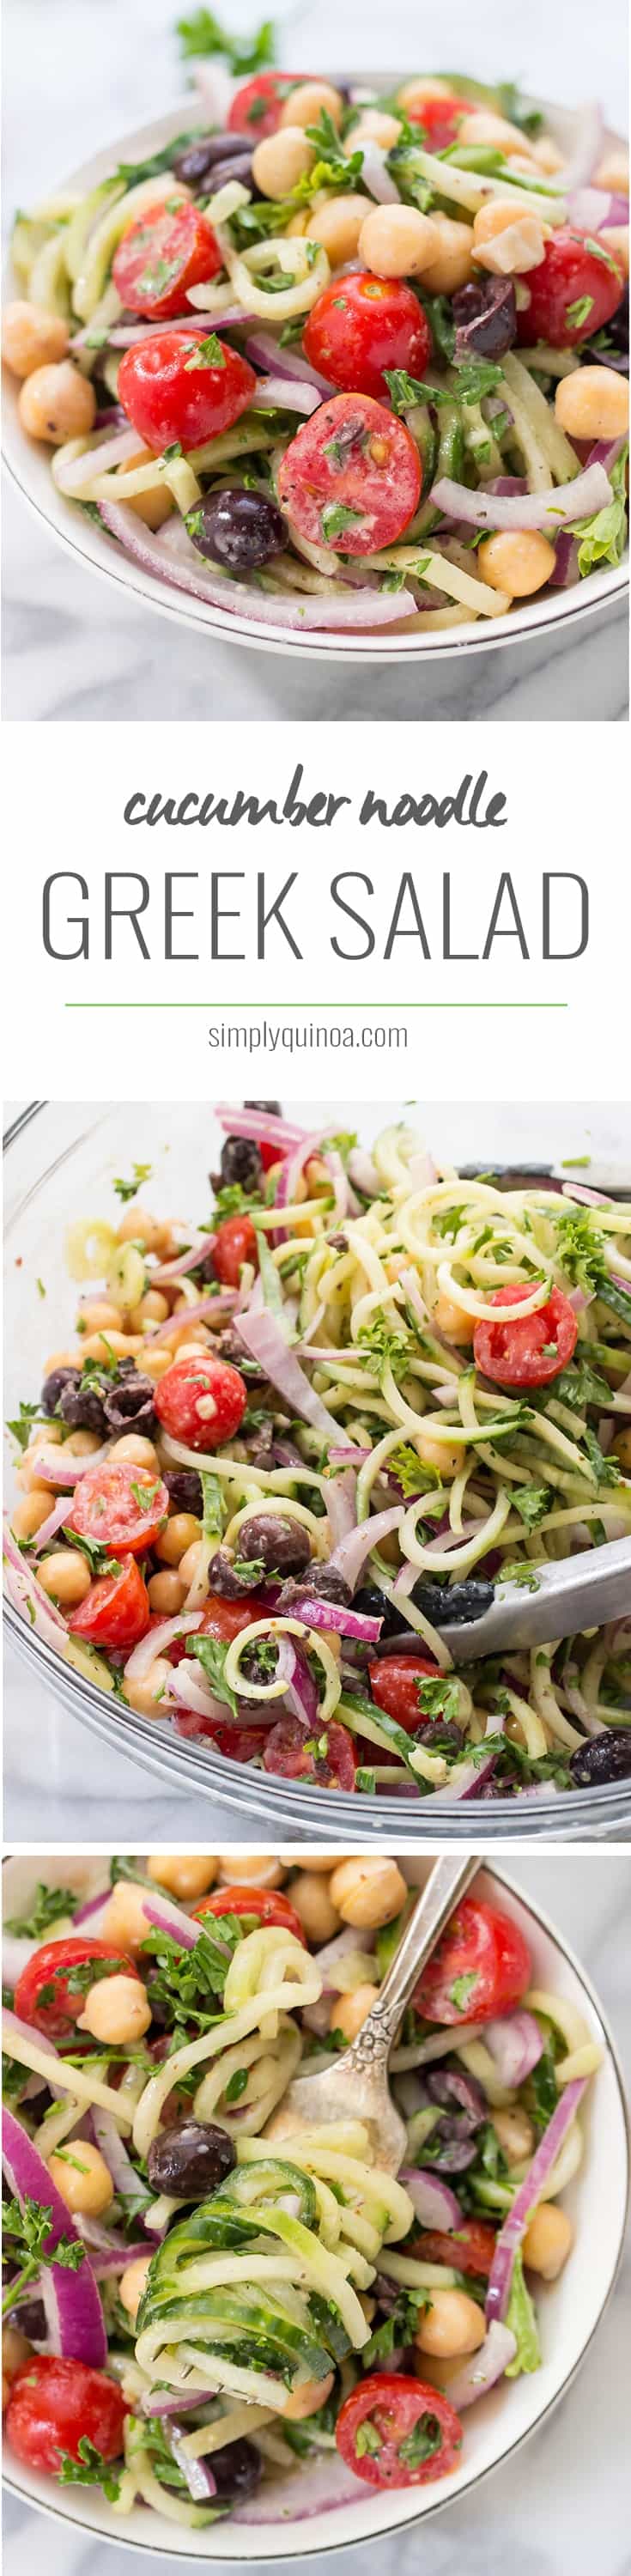 CUCUMBER NOODLE GREEK SALAD -- a refreshing twist on a traditional salad! [vegan + dairy-free]